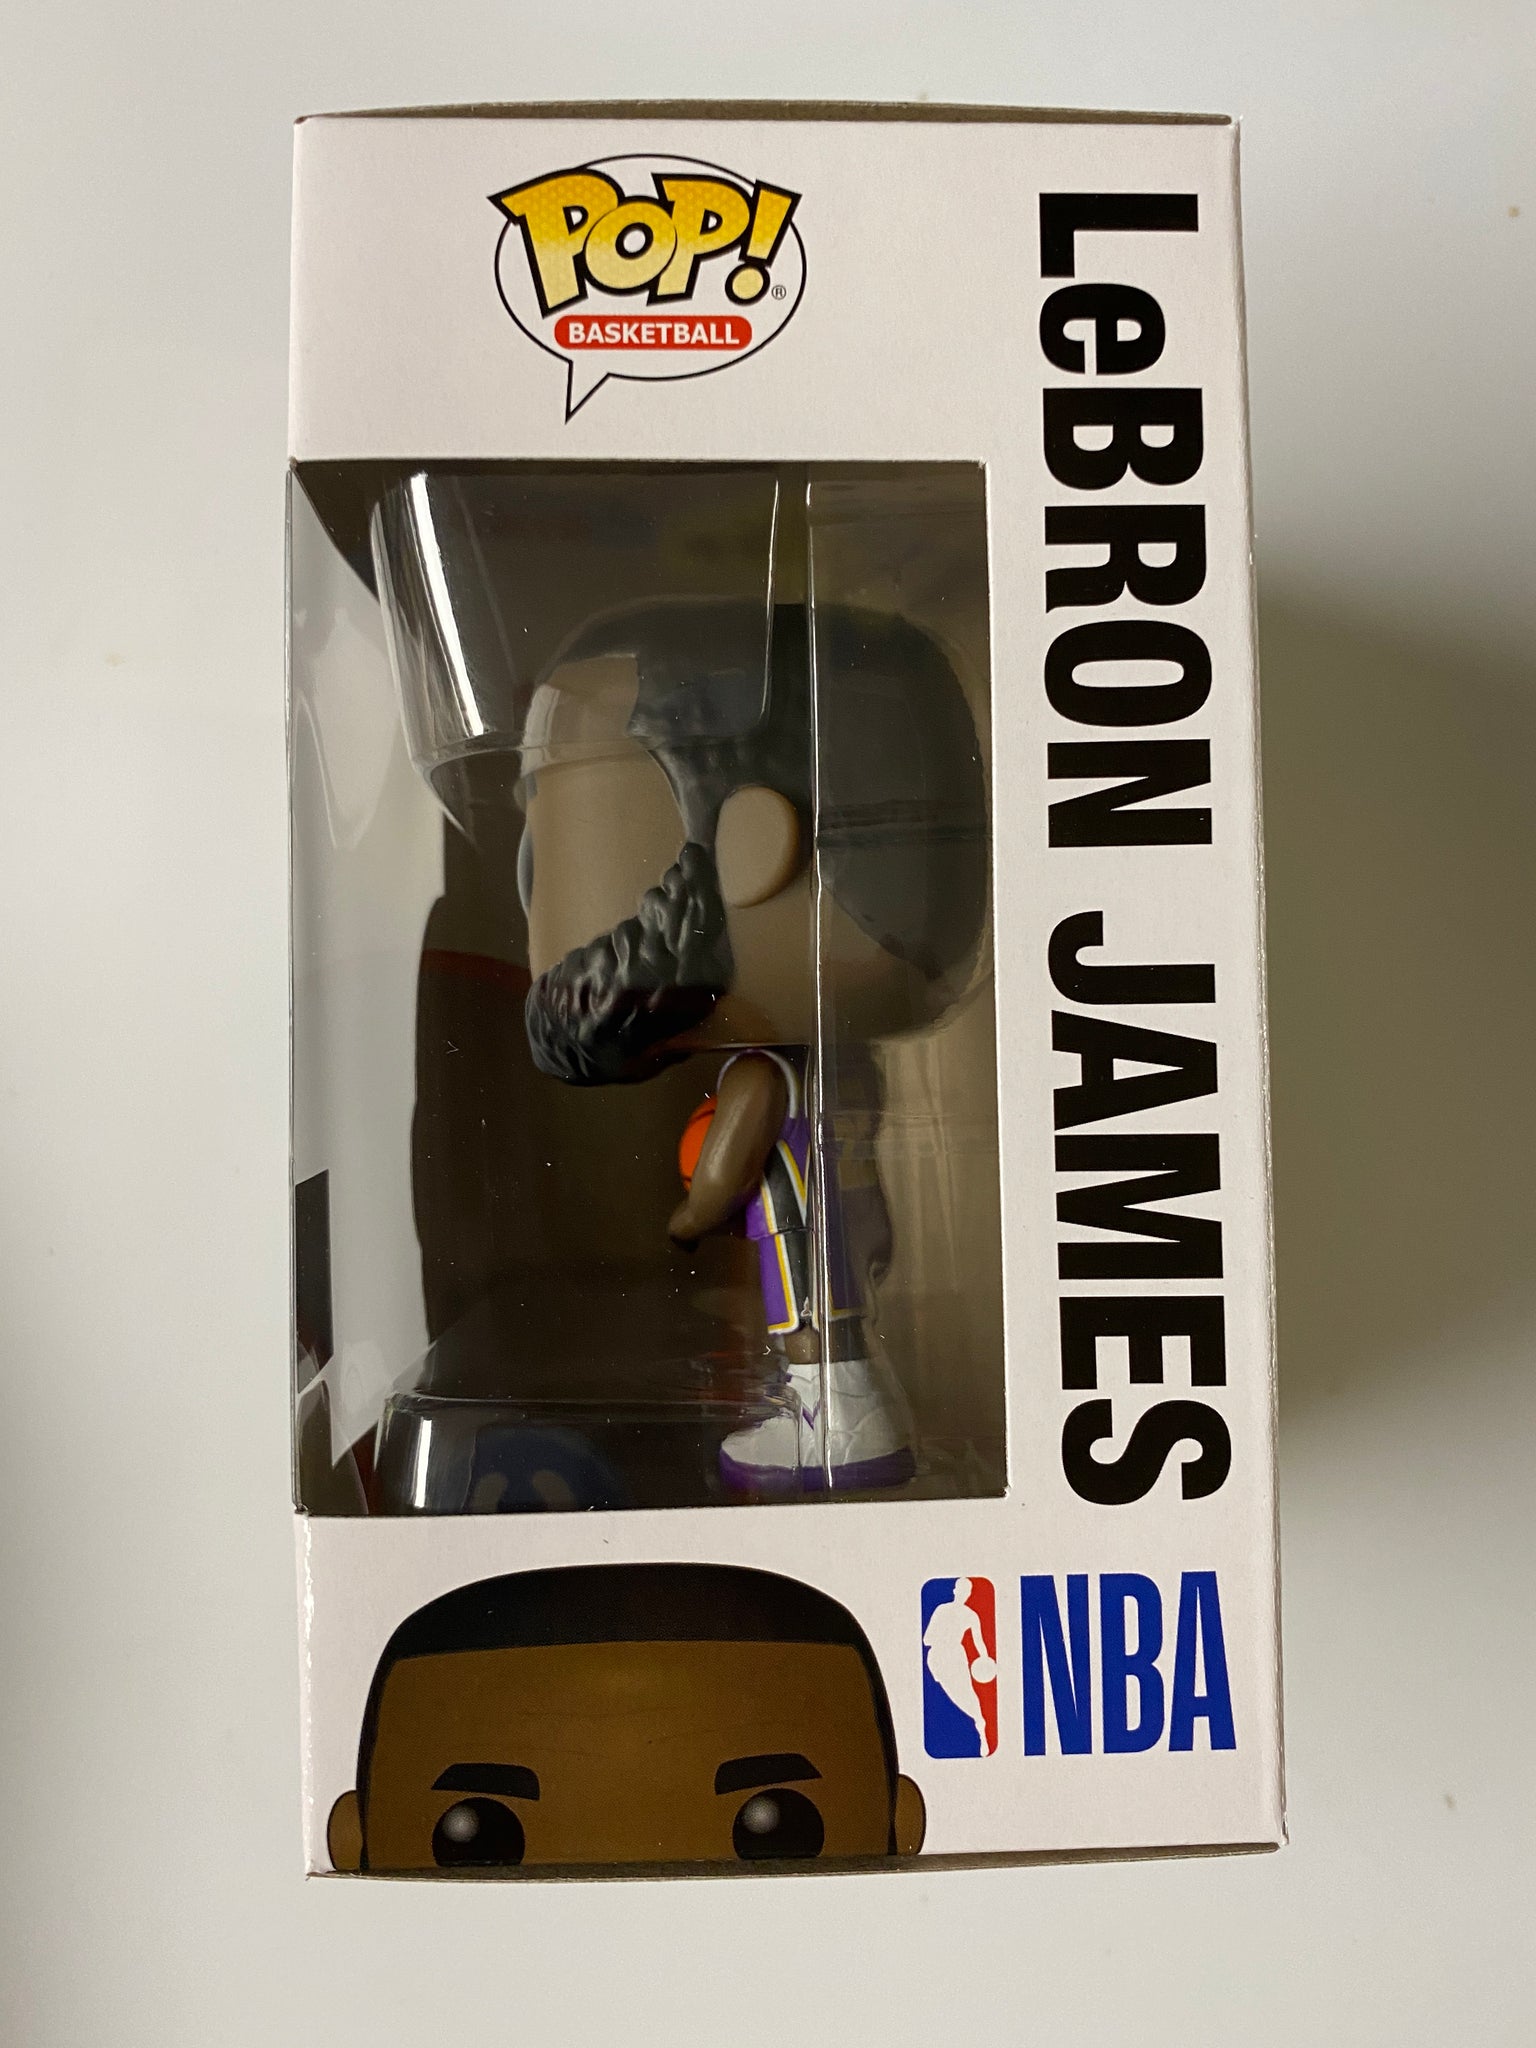 Funko Pop! Basketball NBA LeBron James Lakers (Purple Jersey